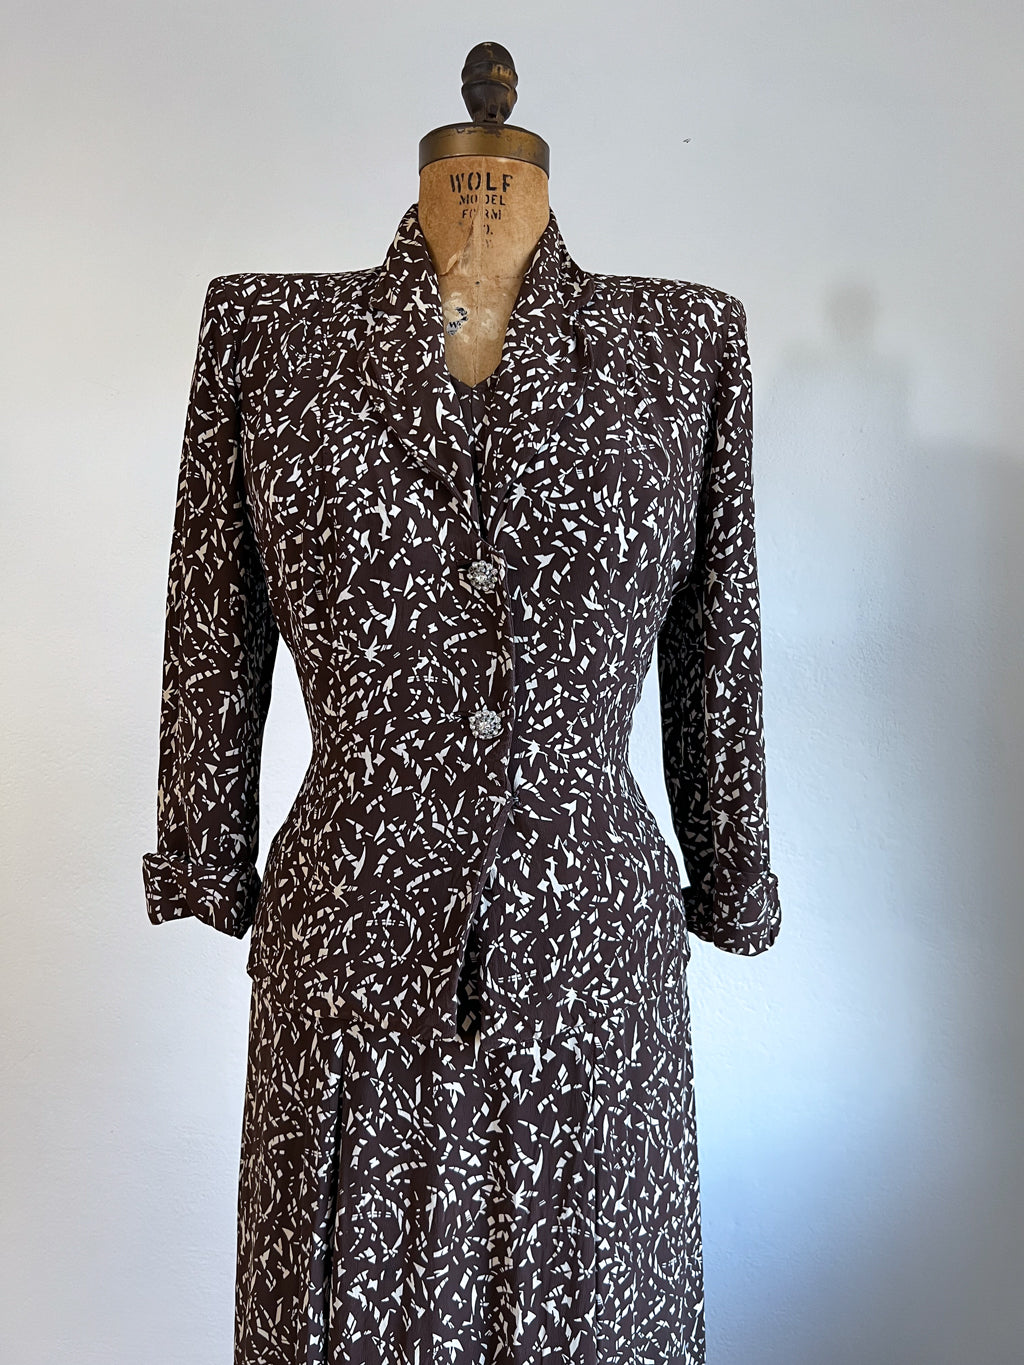 Vintage 1940s Rayon Dress Suit - VOLUP Snappy Chocolate White Tropical Jacket + Dress w Rhinestones Size XL